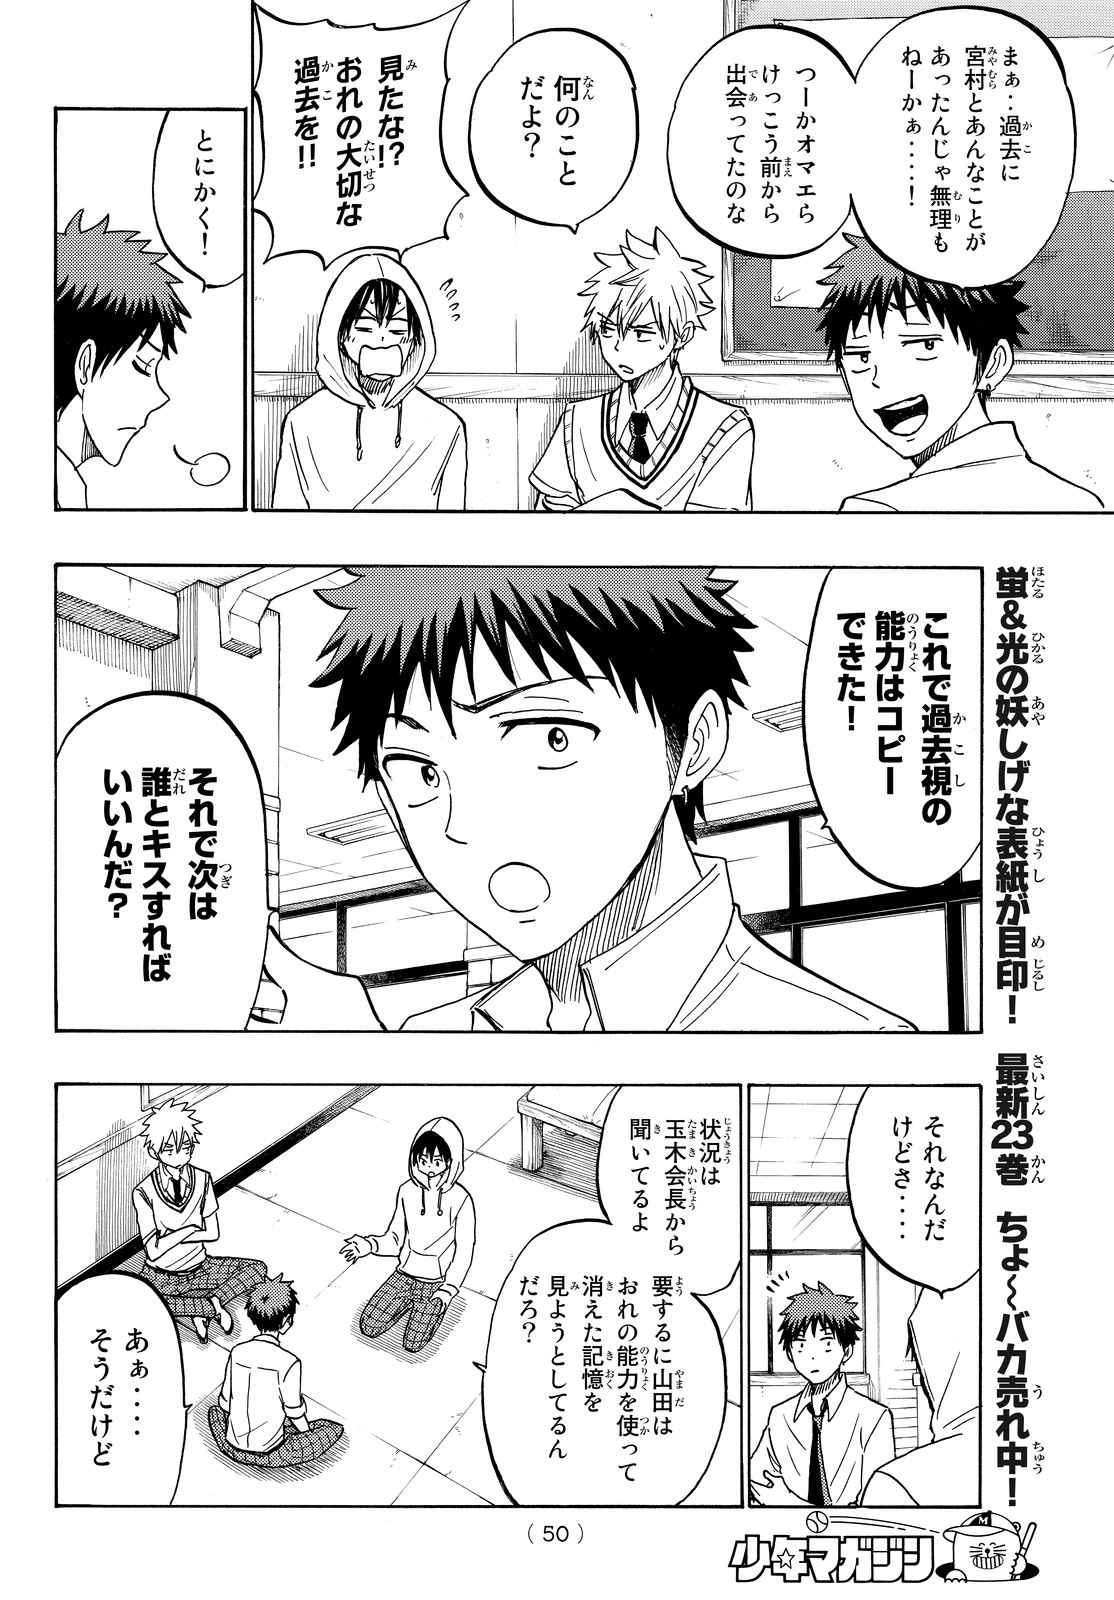 Yamada-kun to 7-nin no Majo - Chapter 211 - Page 4